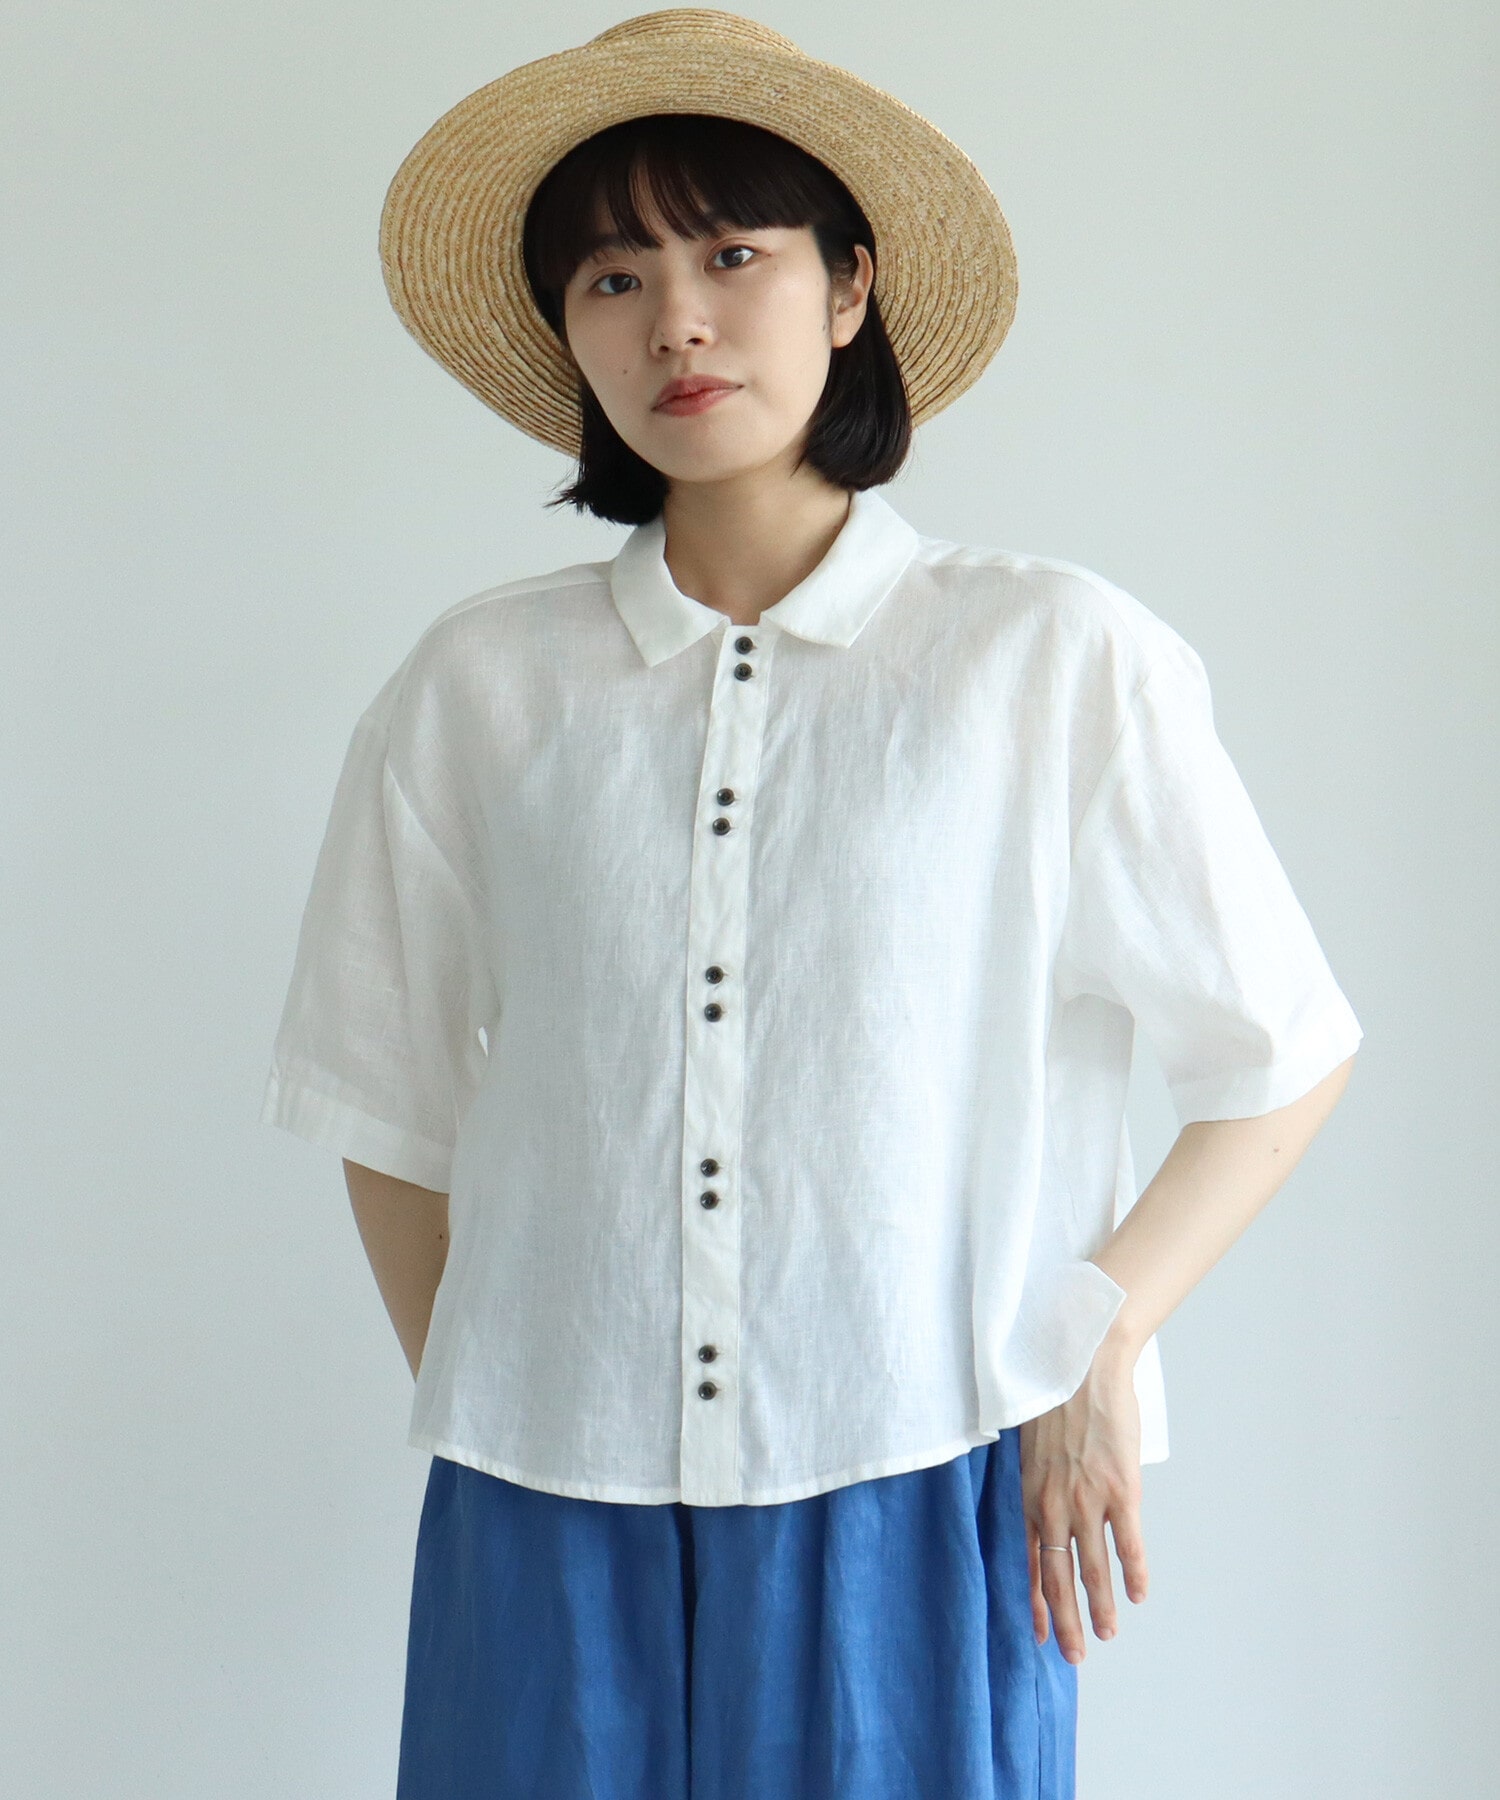 AMBIDEX Store △60s フレンチリネン boy shirt(F クロ): bulle de savon